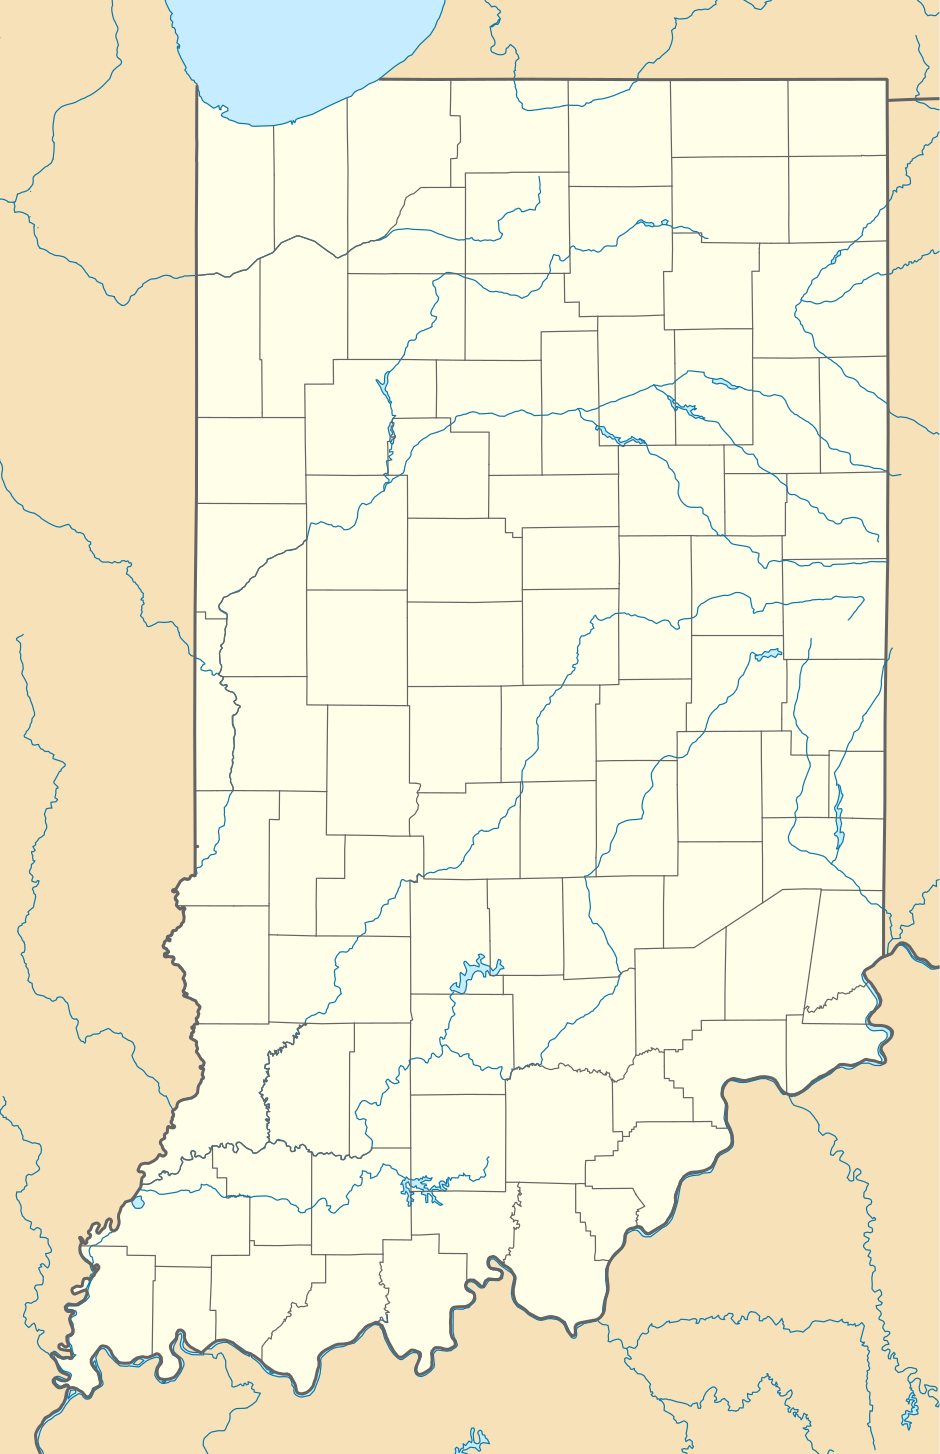 Cincinnati Reds Radio Network is located in Indiana